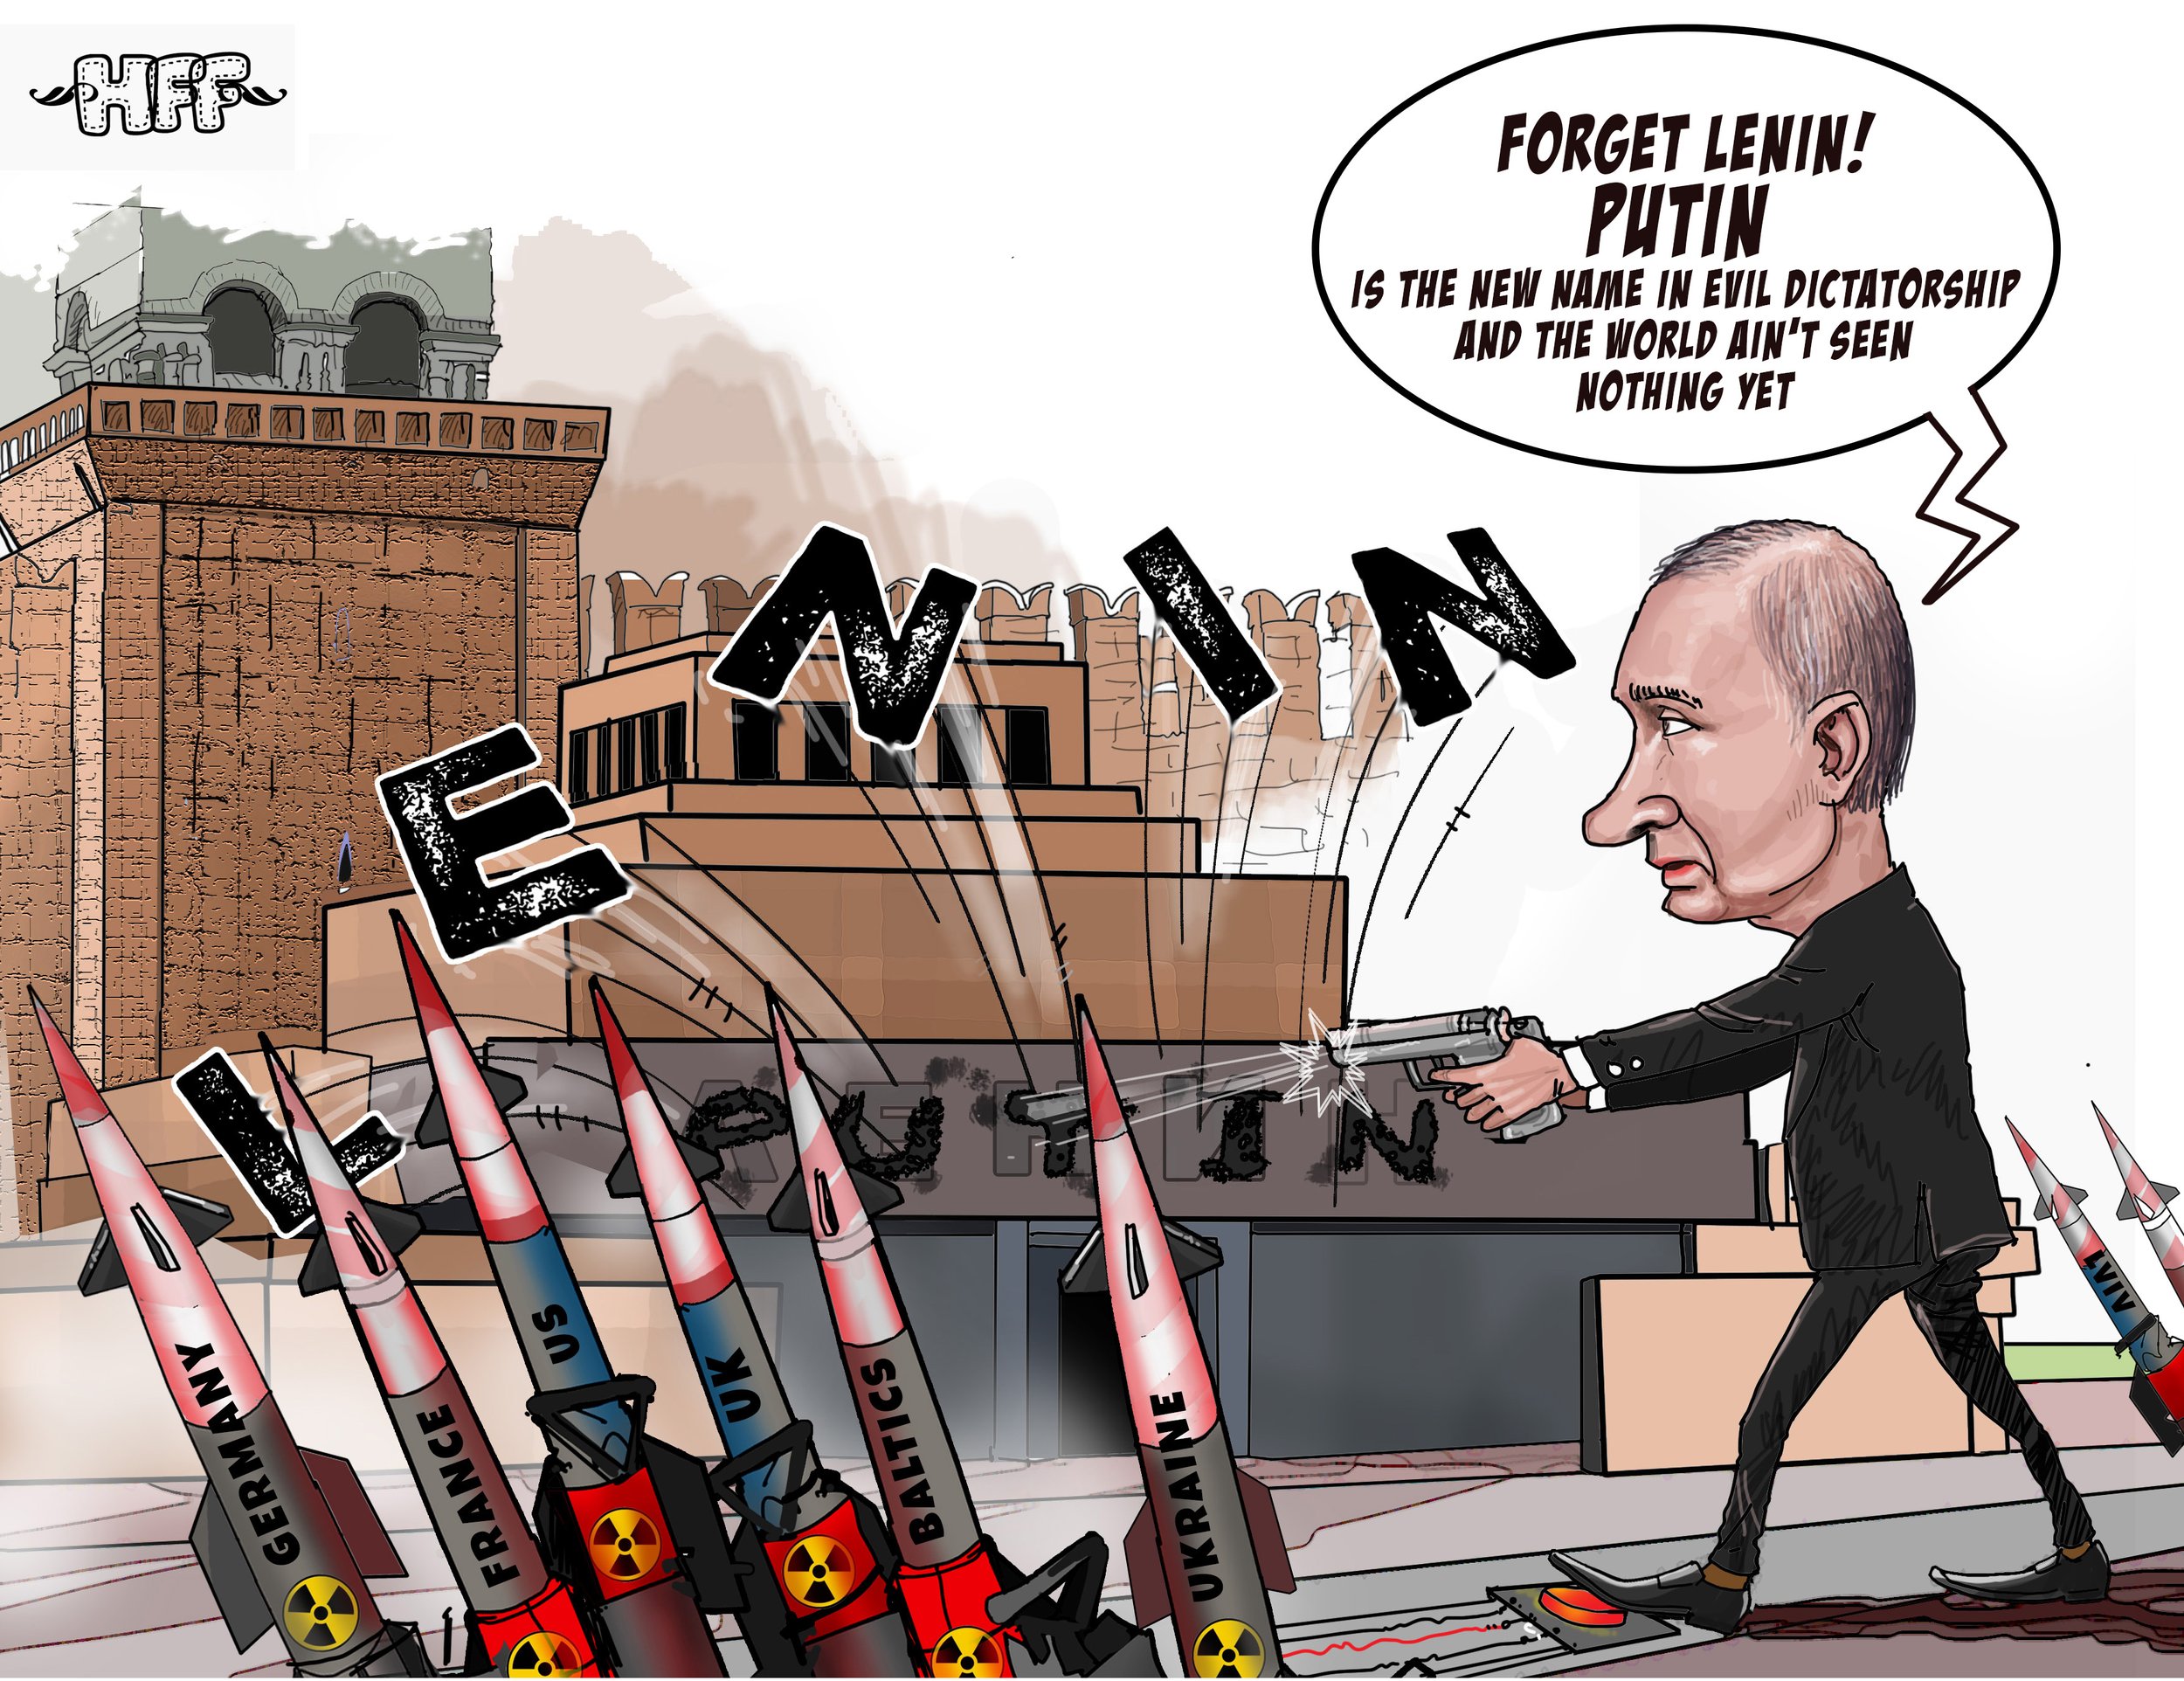 Putin Cartoon English.jpg